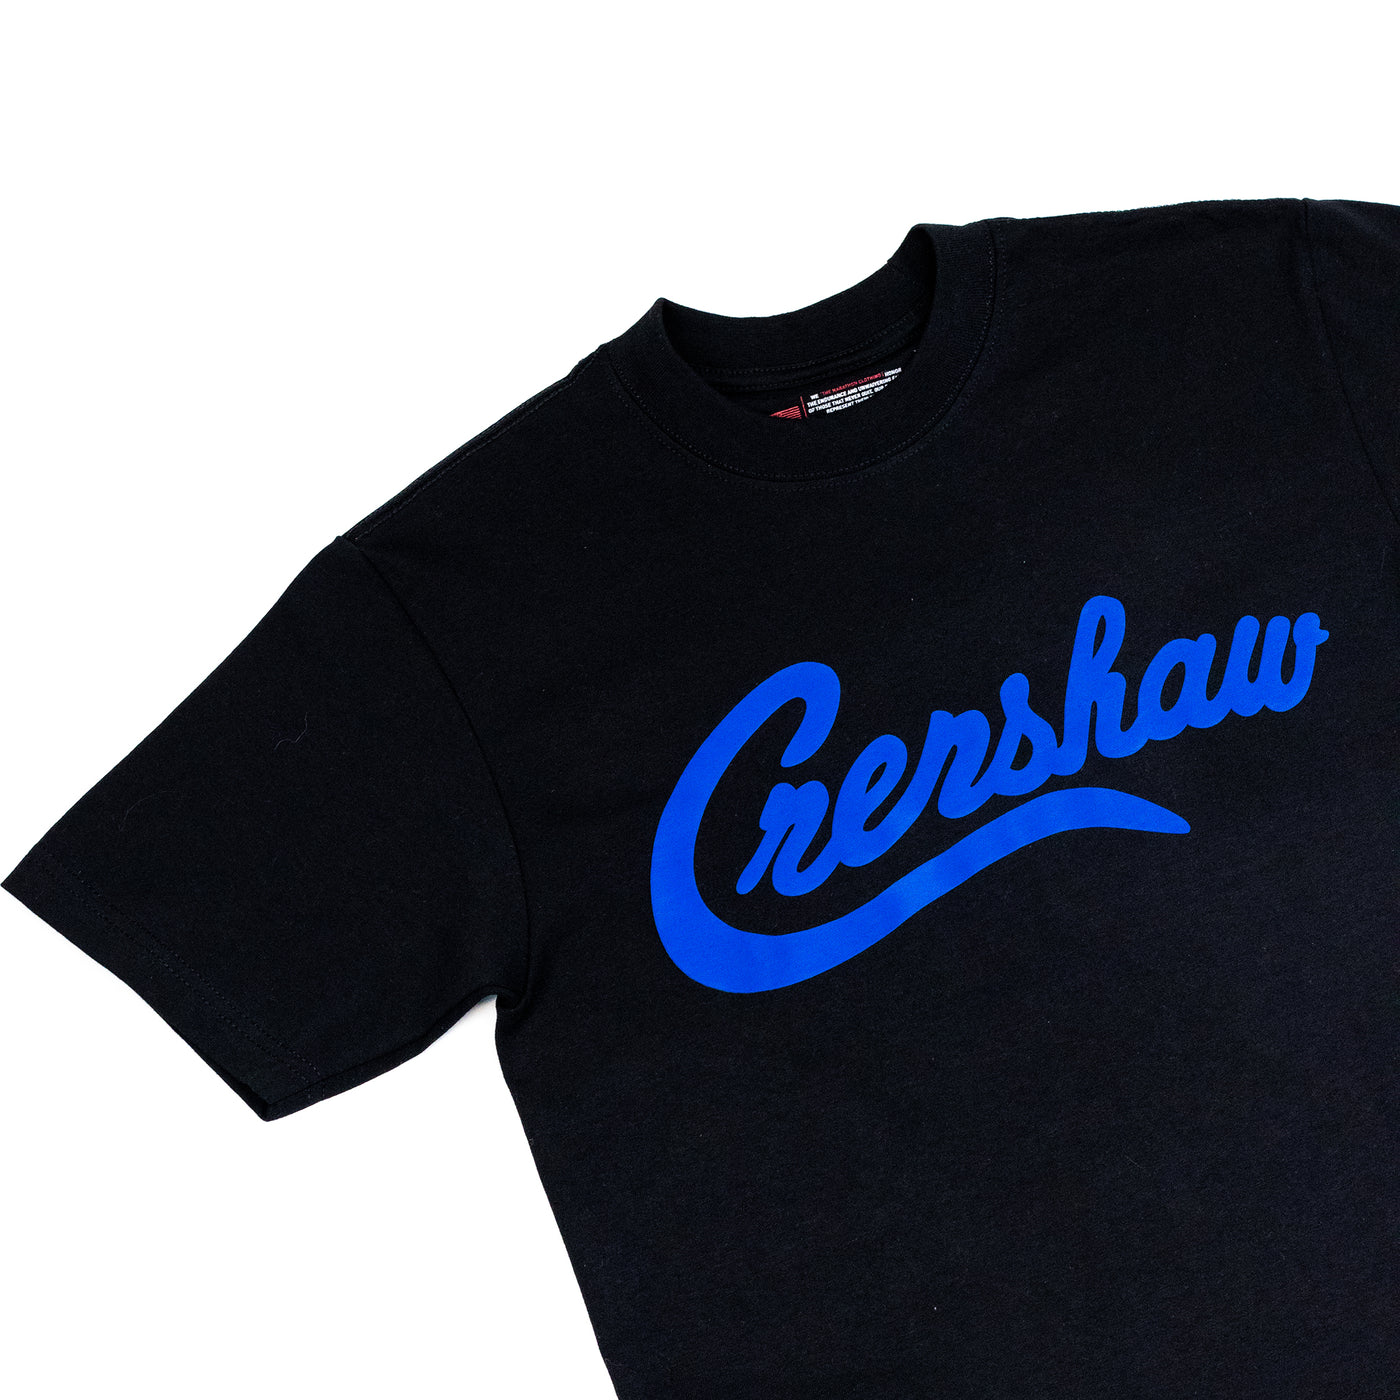 Crenshaw T-Shirt - Black/Royal - Detail